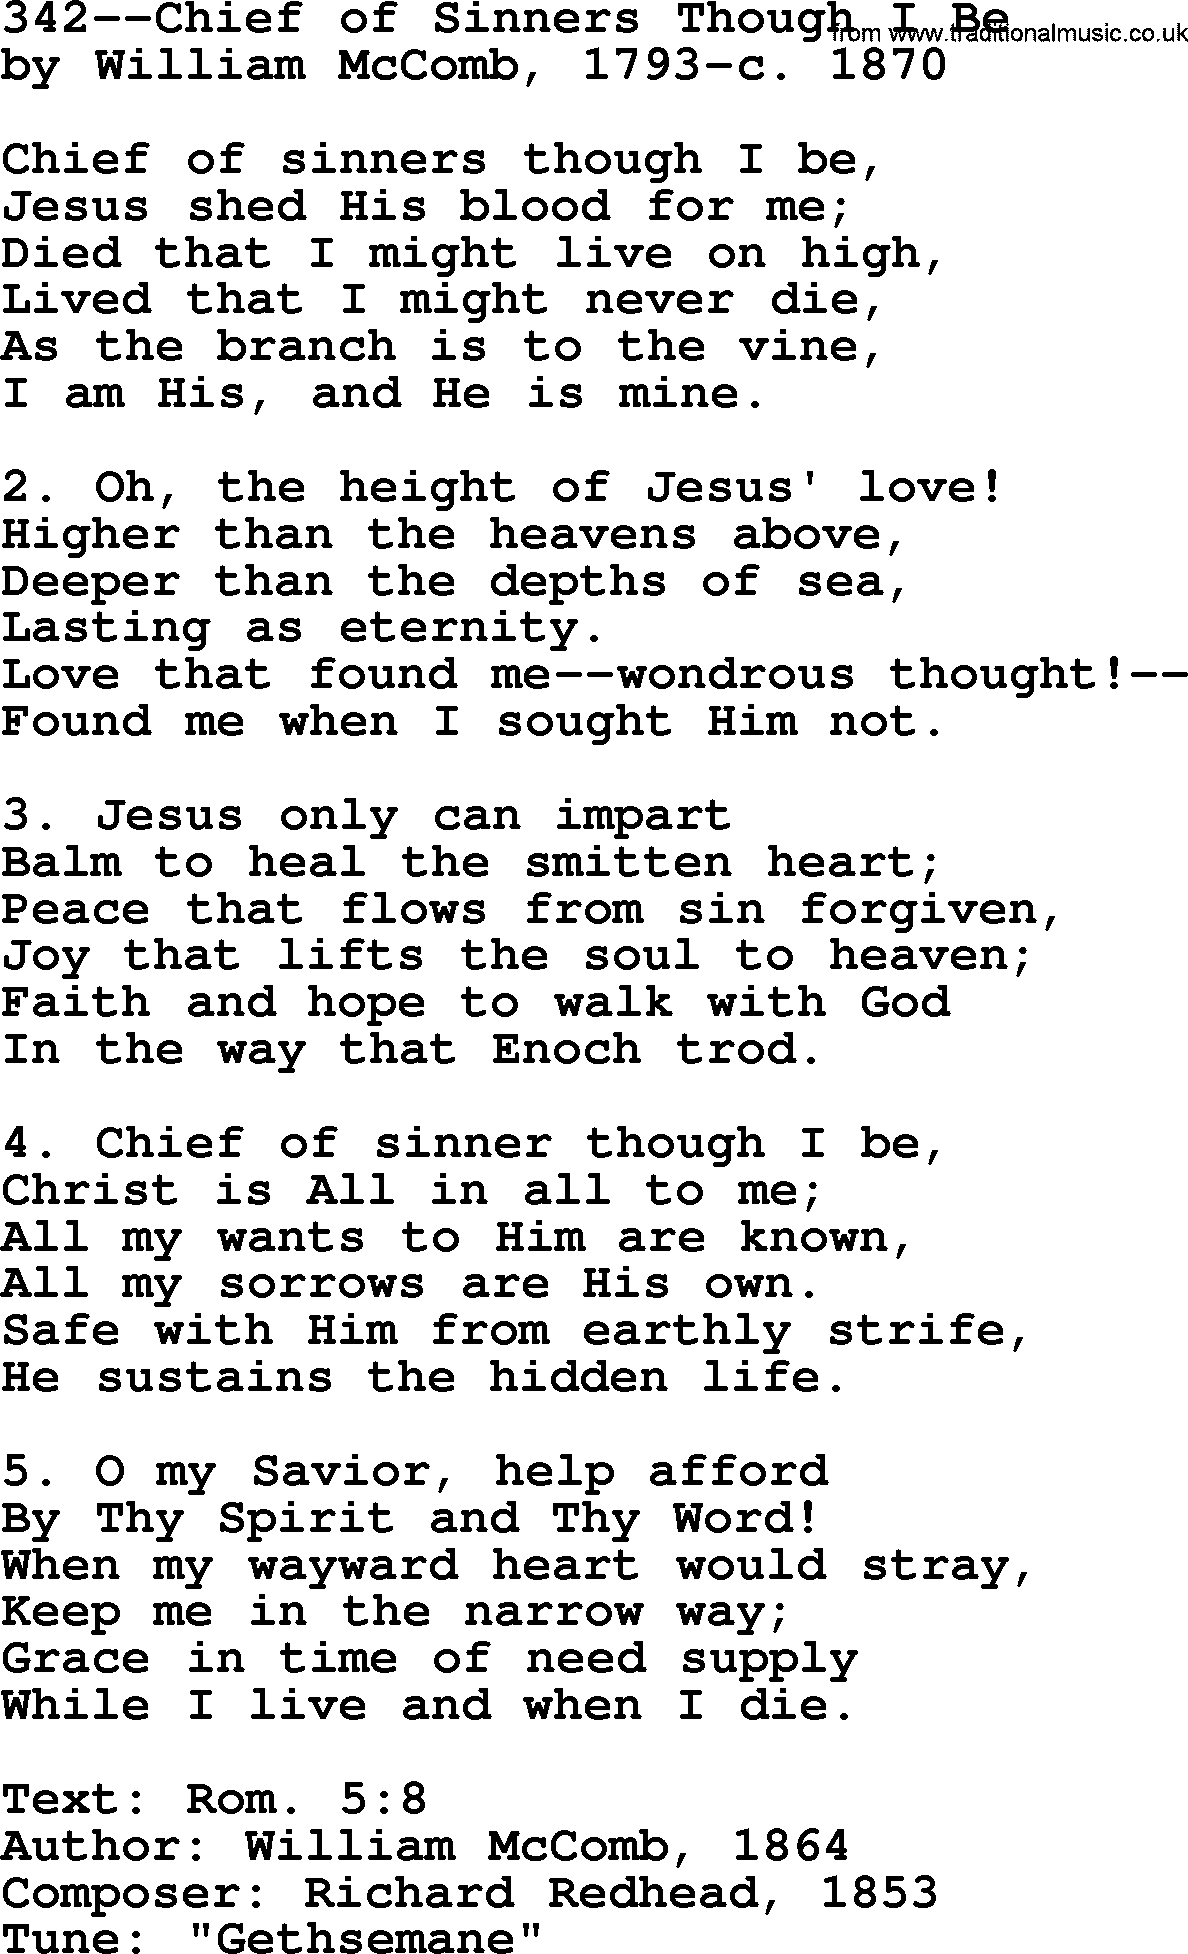 Lutheran Hymn: 342--Chief of Sinners Though I Be.txt lyrics with PDF